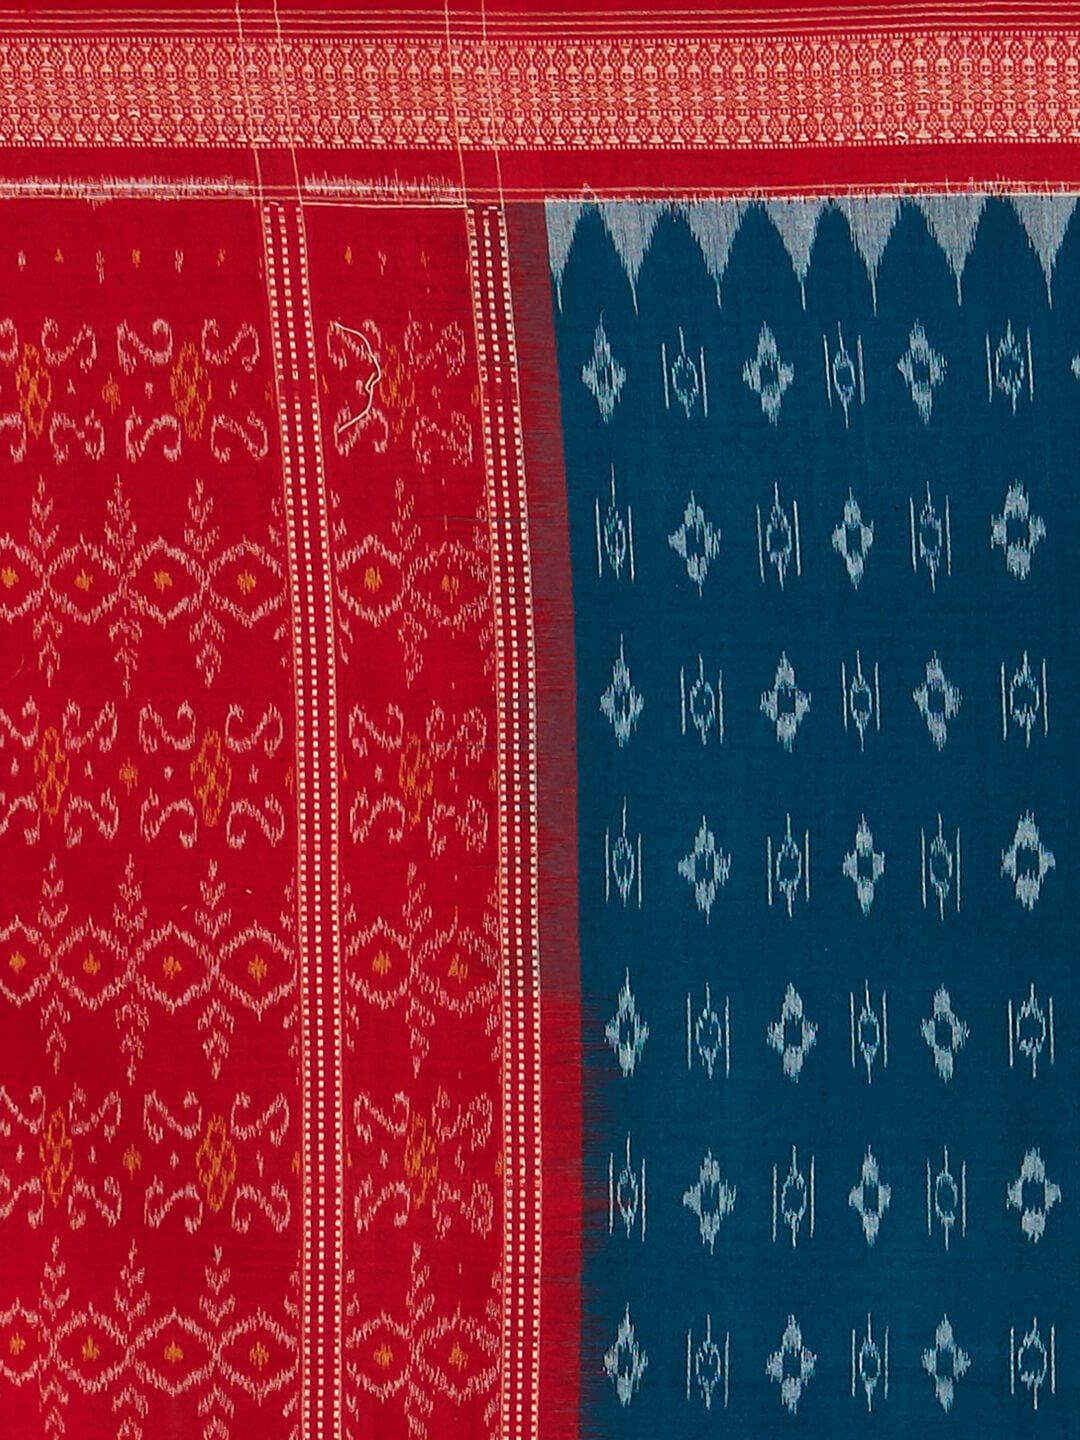 CraftsCollection.in - Green and Red Cotton Sambalpuri Dupatta